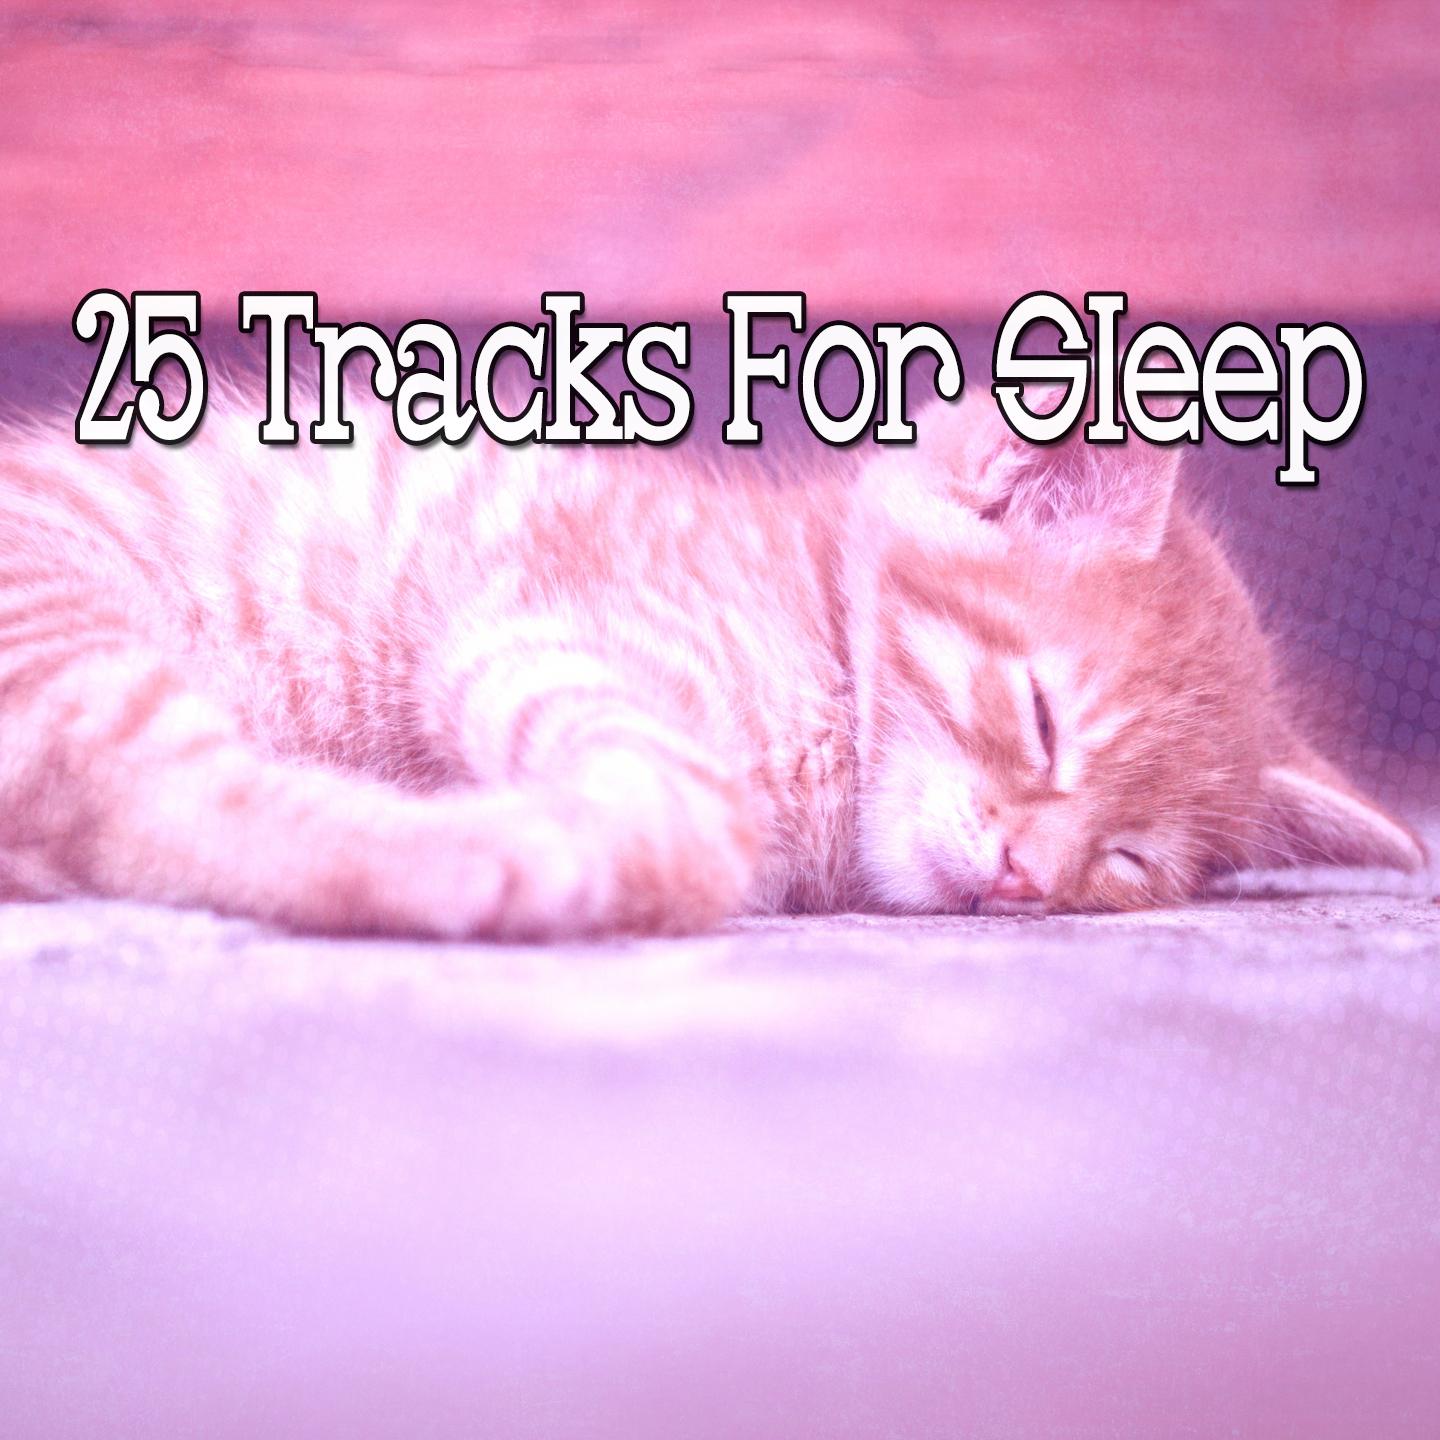 25 Tracks For Sleep